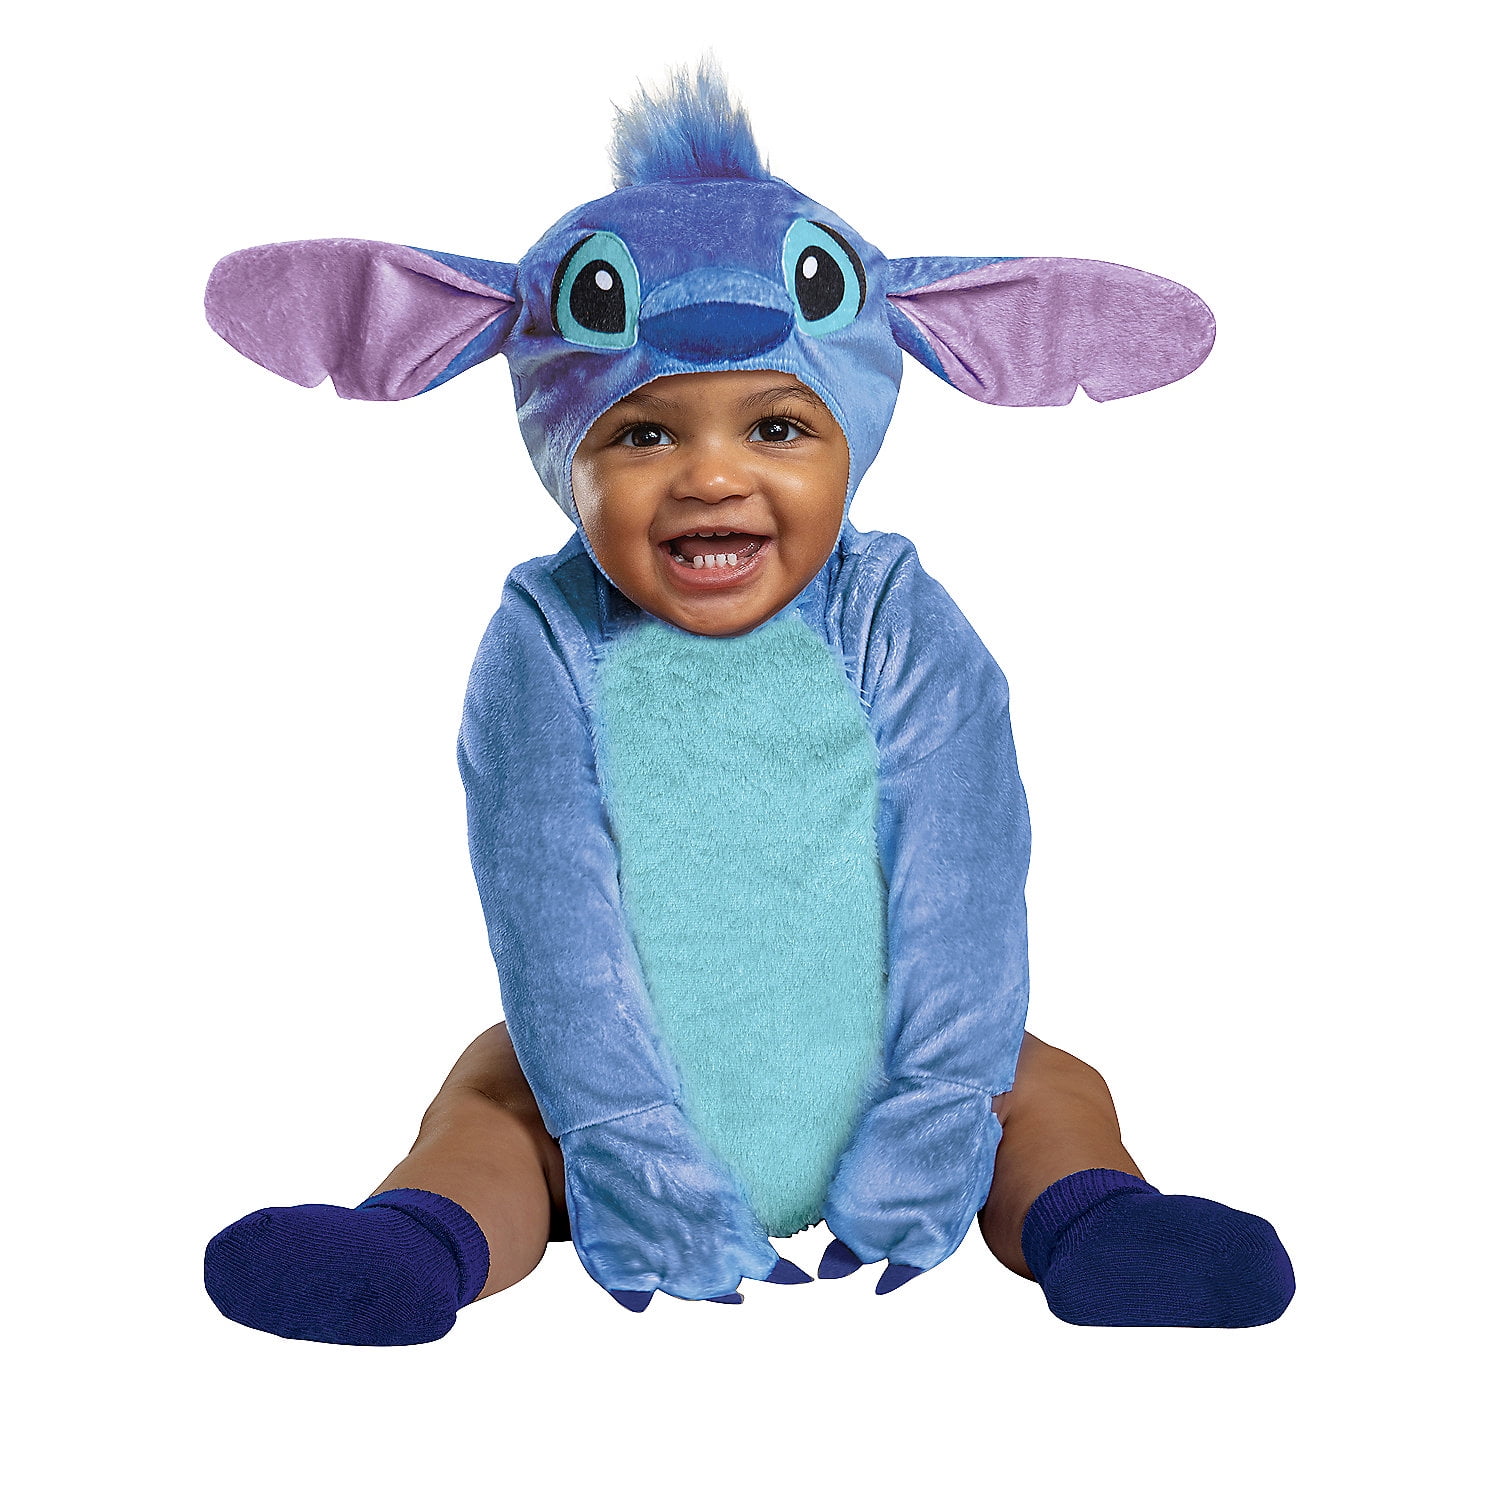 Toddler Disney Angel Lilo and Stitch Costume